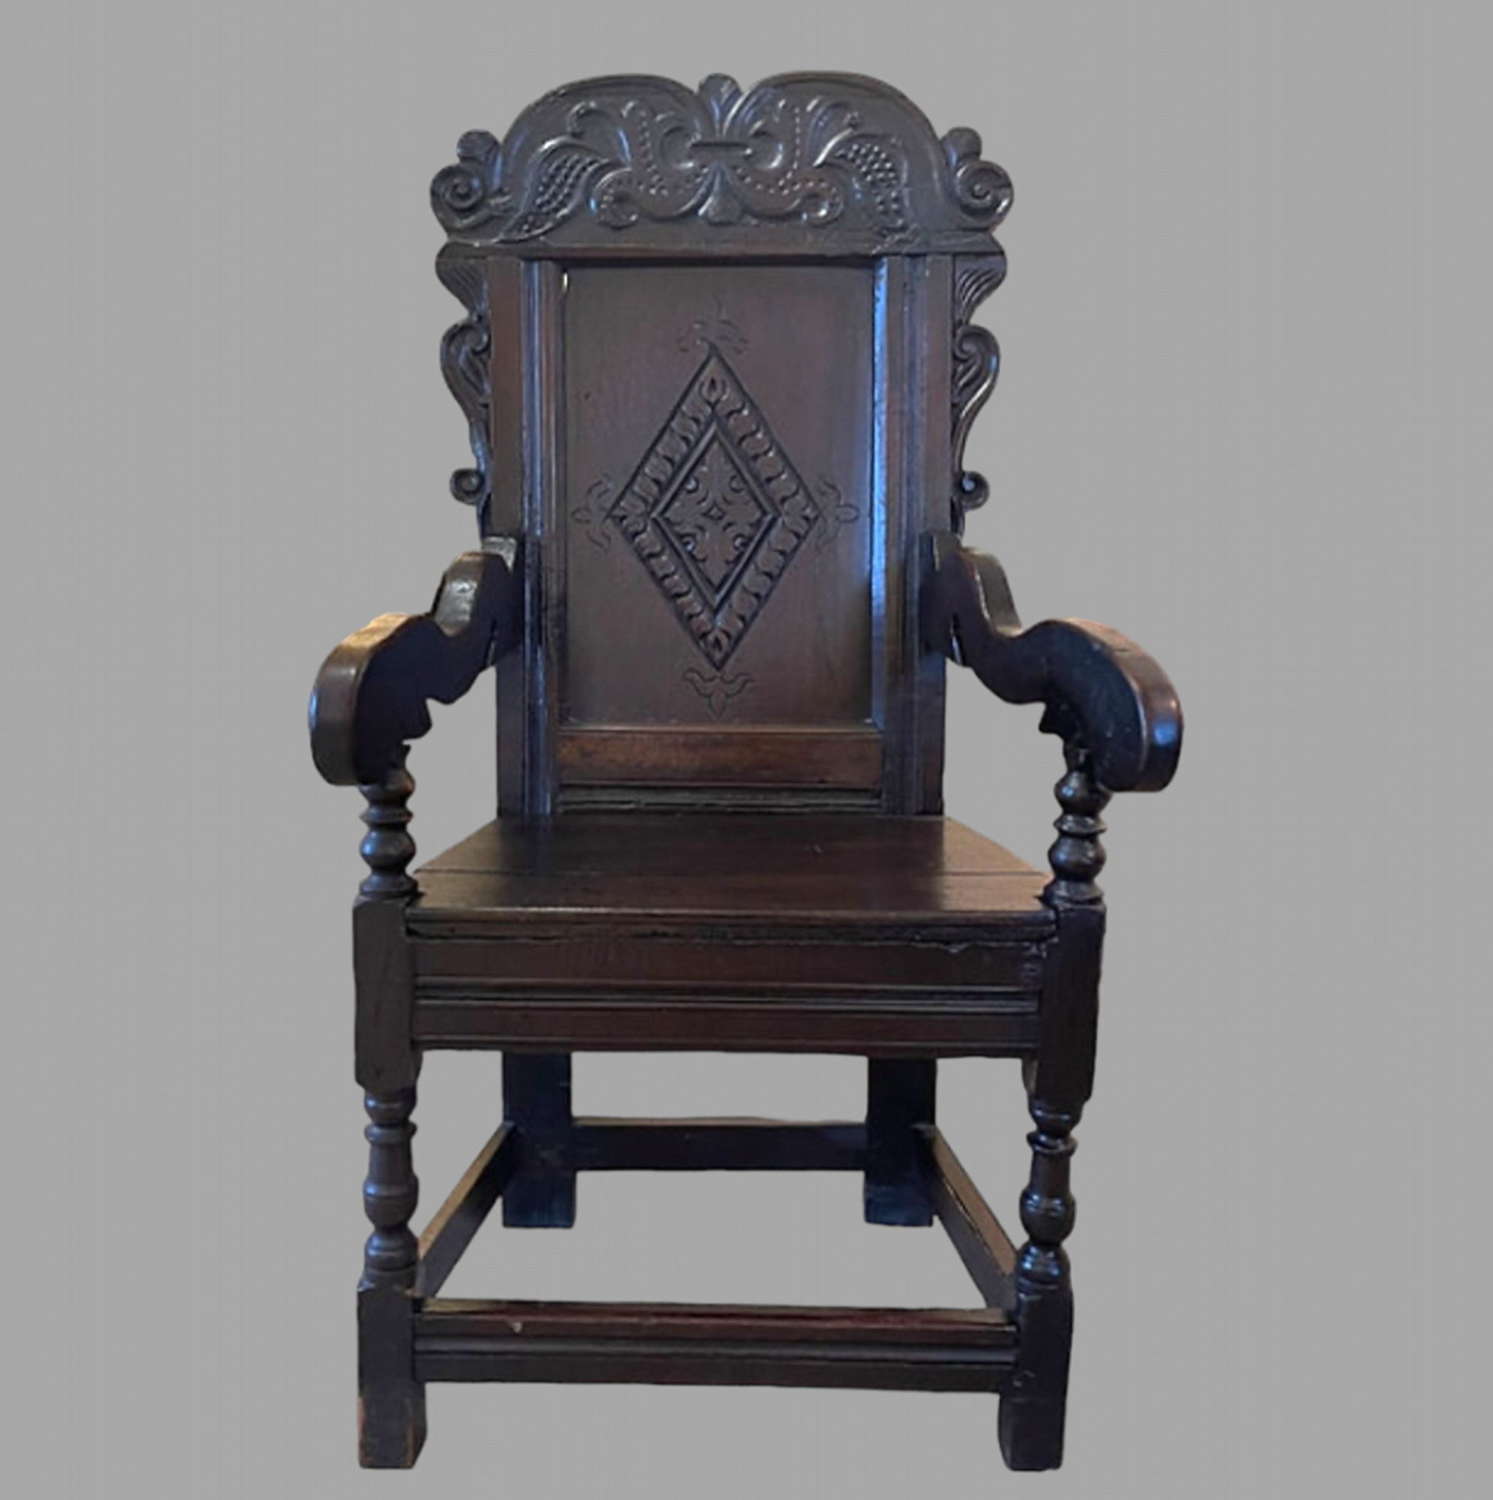 A C17th Solid Oak Wainscott Chair